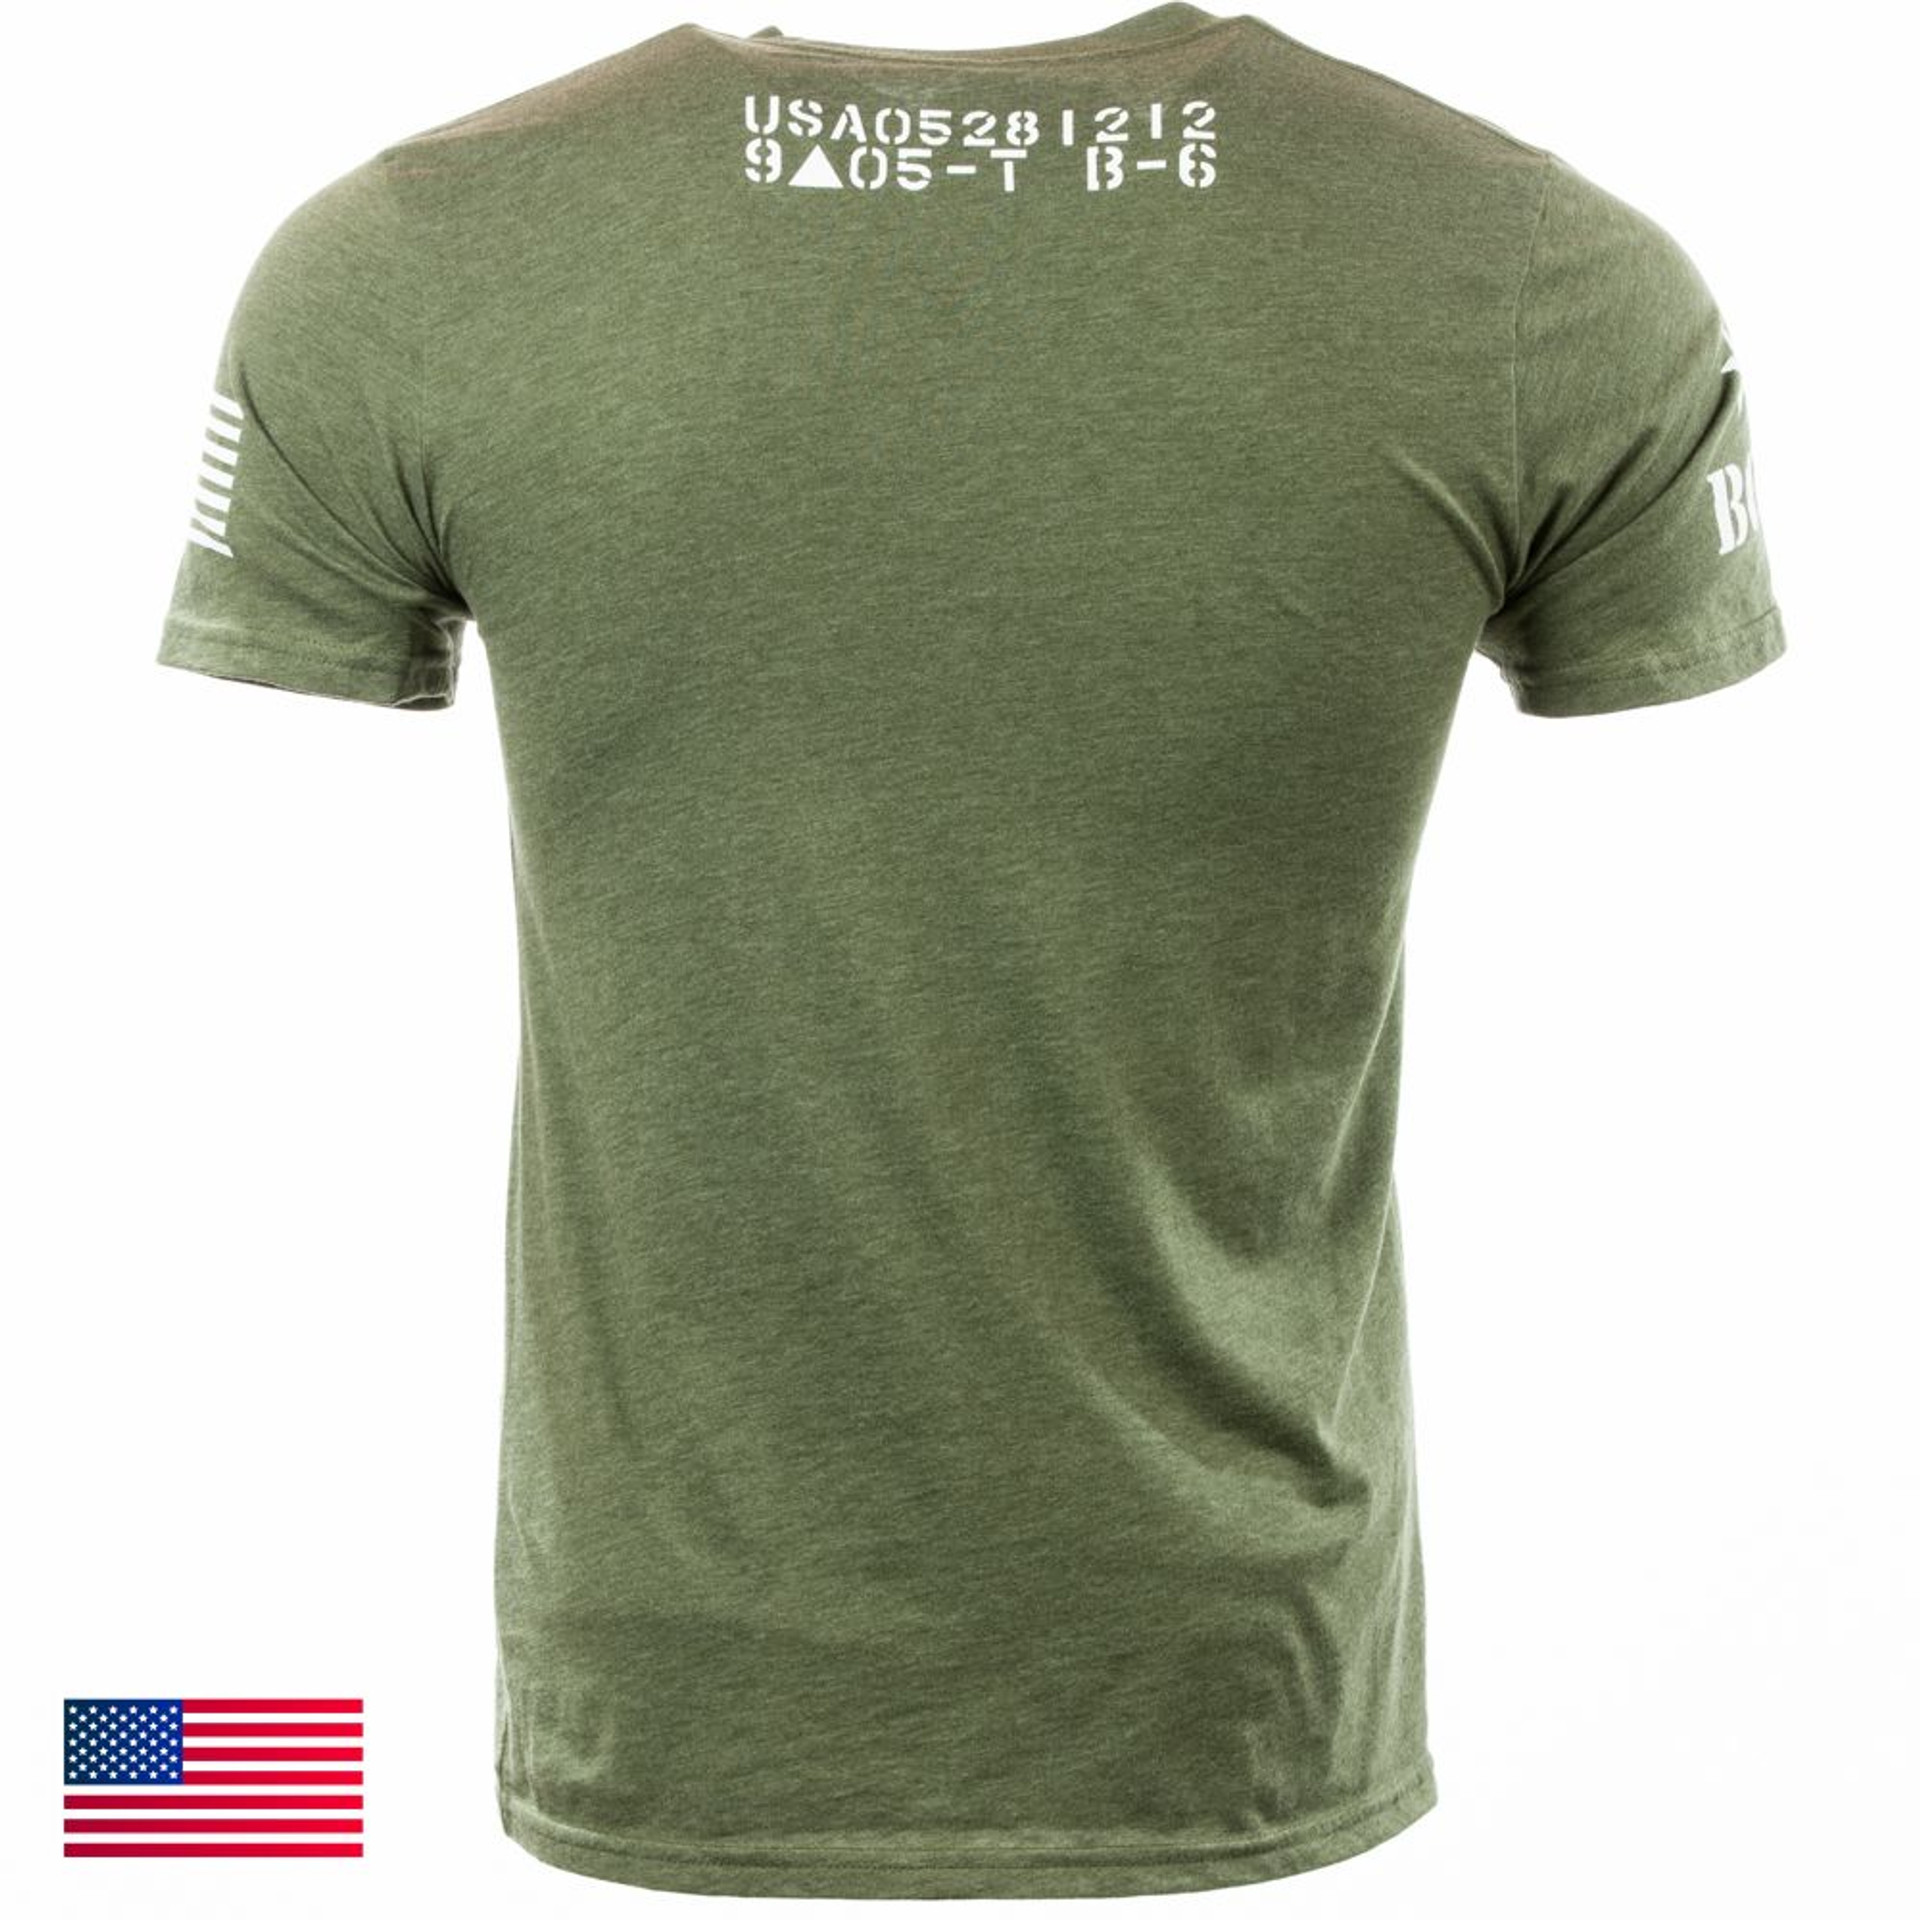 Corps T-Shirt S/S, Mod 0 (Green/White)